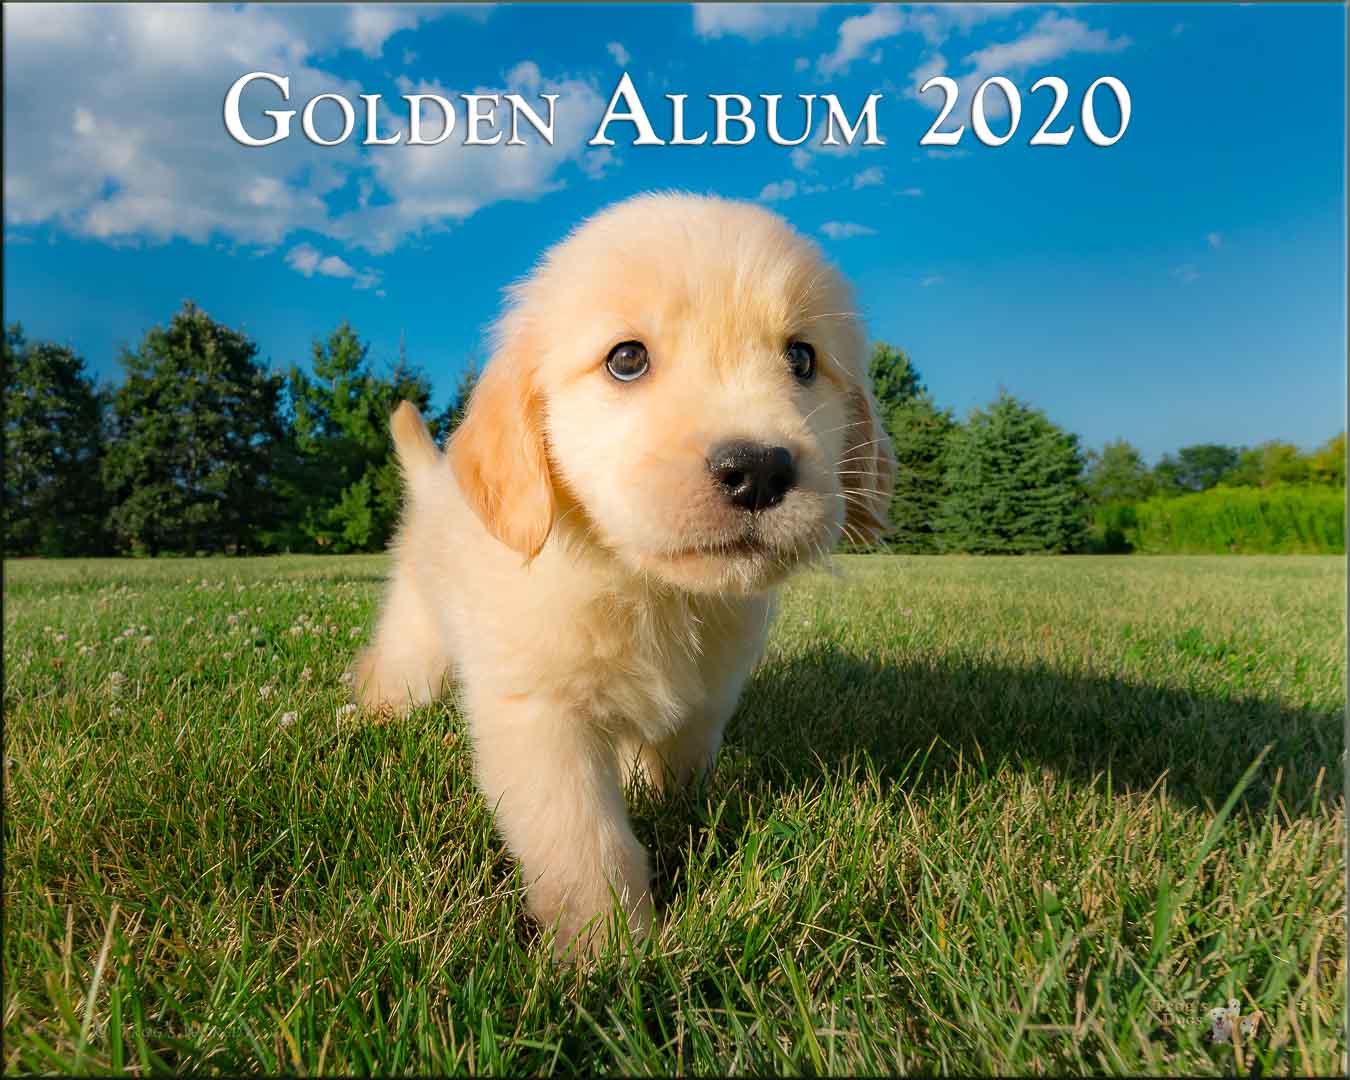 Golden Retriever Puppy in the grass